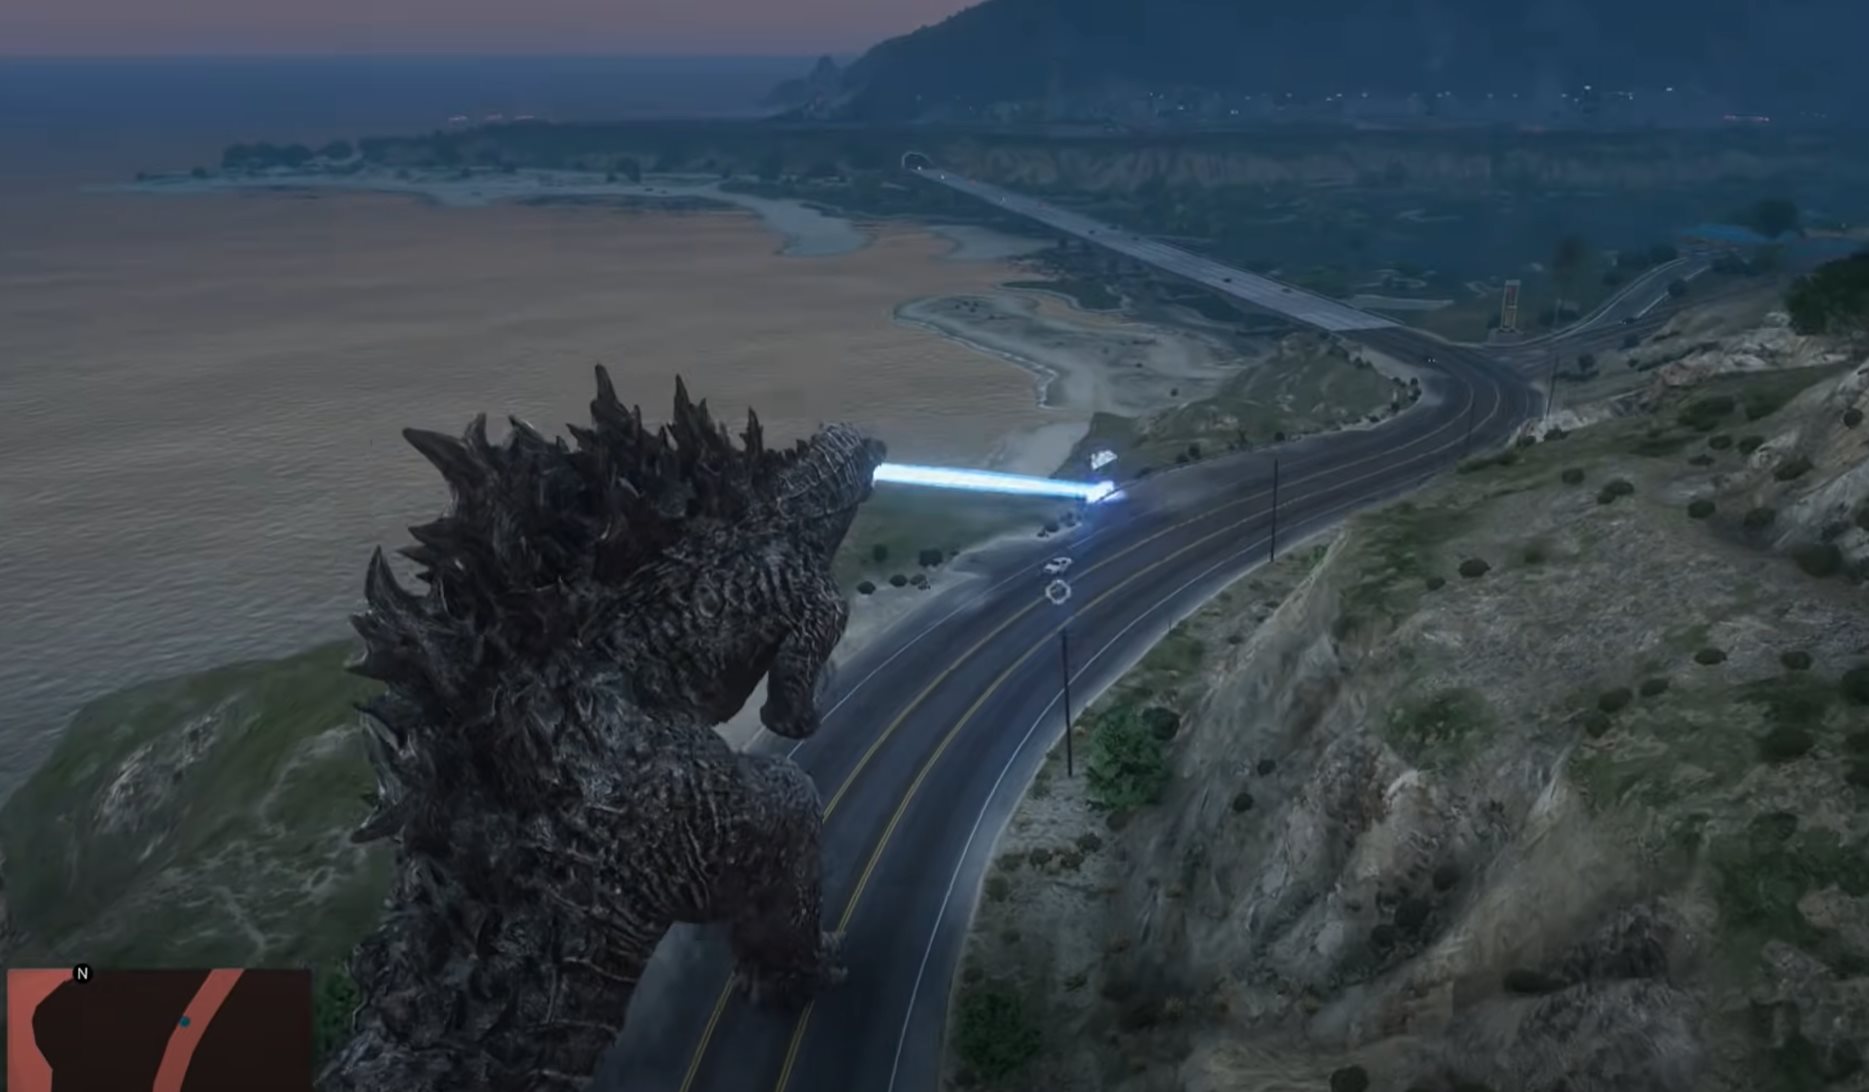 Insane Godzilla GTA 5 Mod Lets You Wreak Havoc in Los Santos - autoevolution